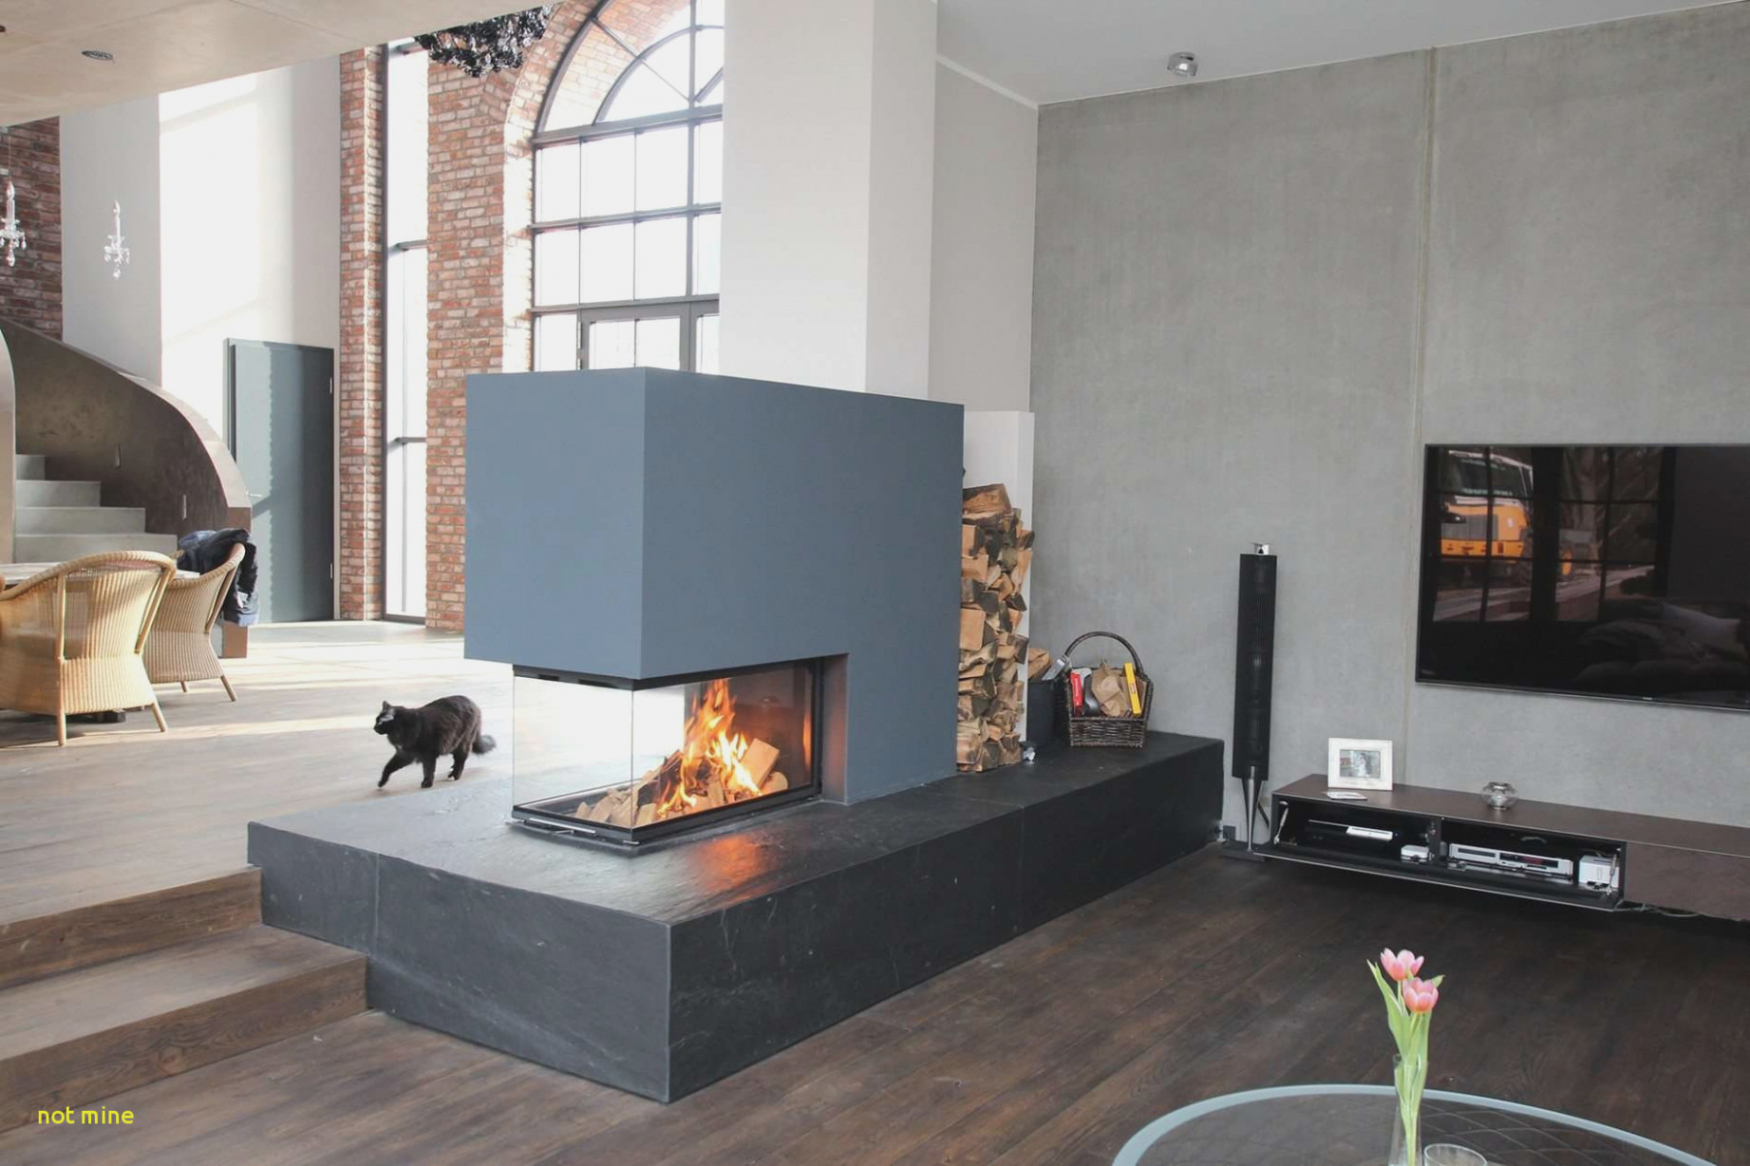 Removing Stone From Fireplace Luxury Fernseher über Kamin — Temobardz Home Blog